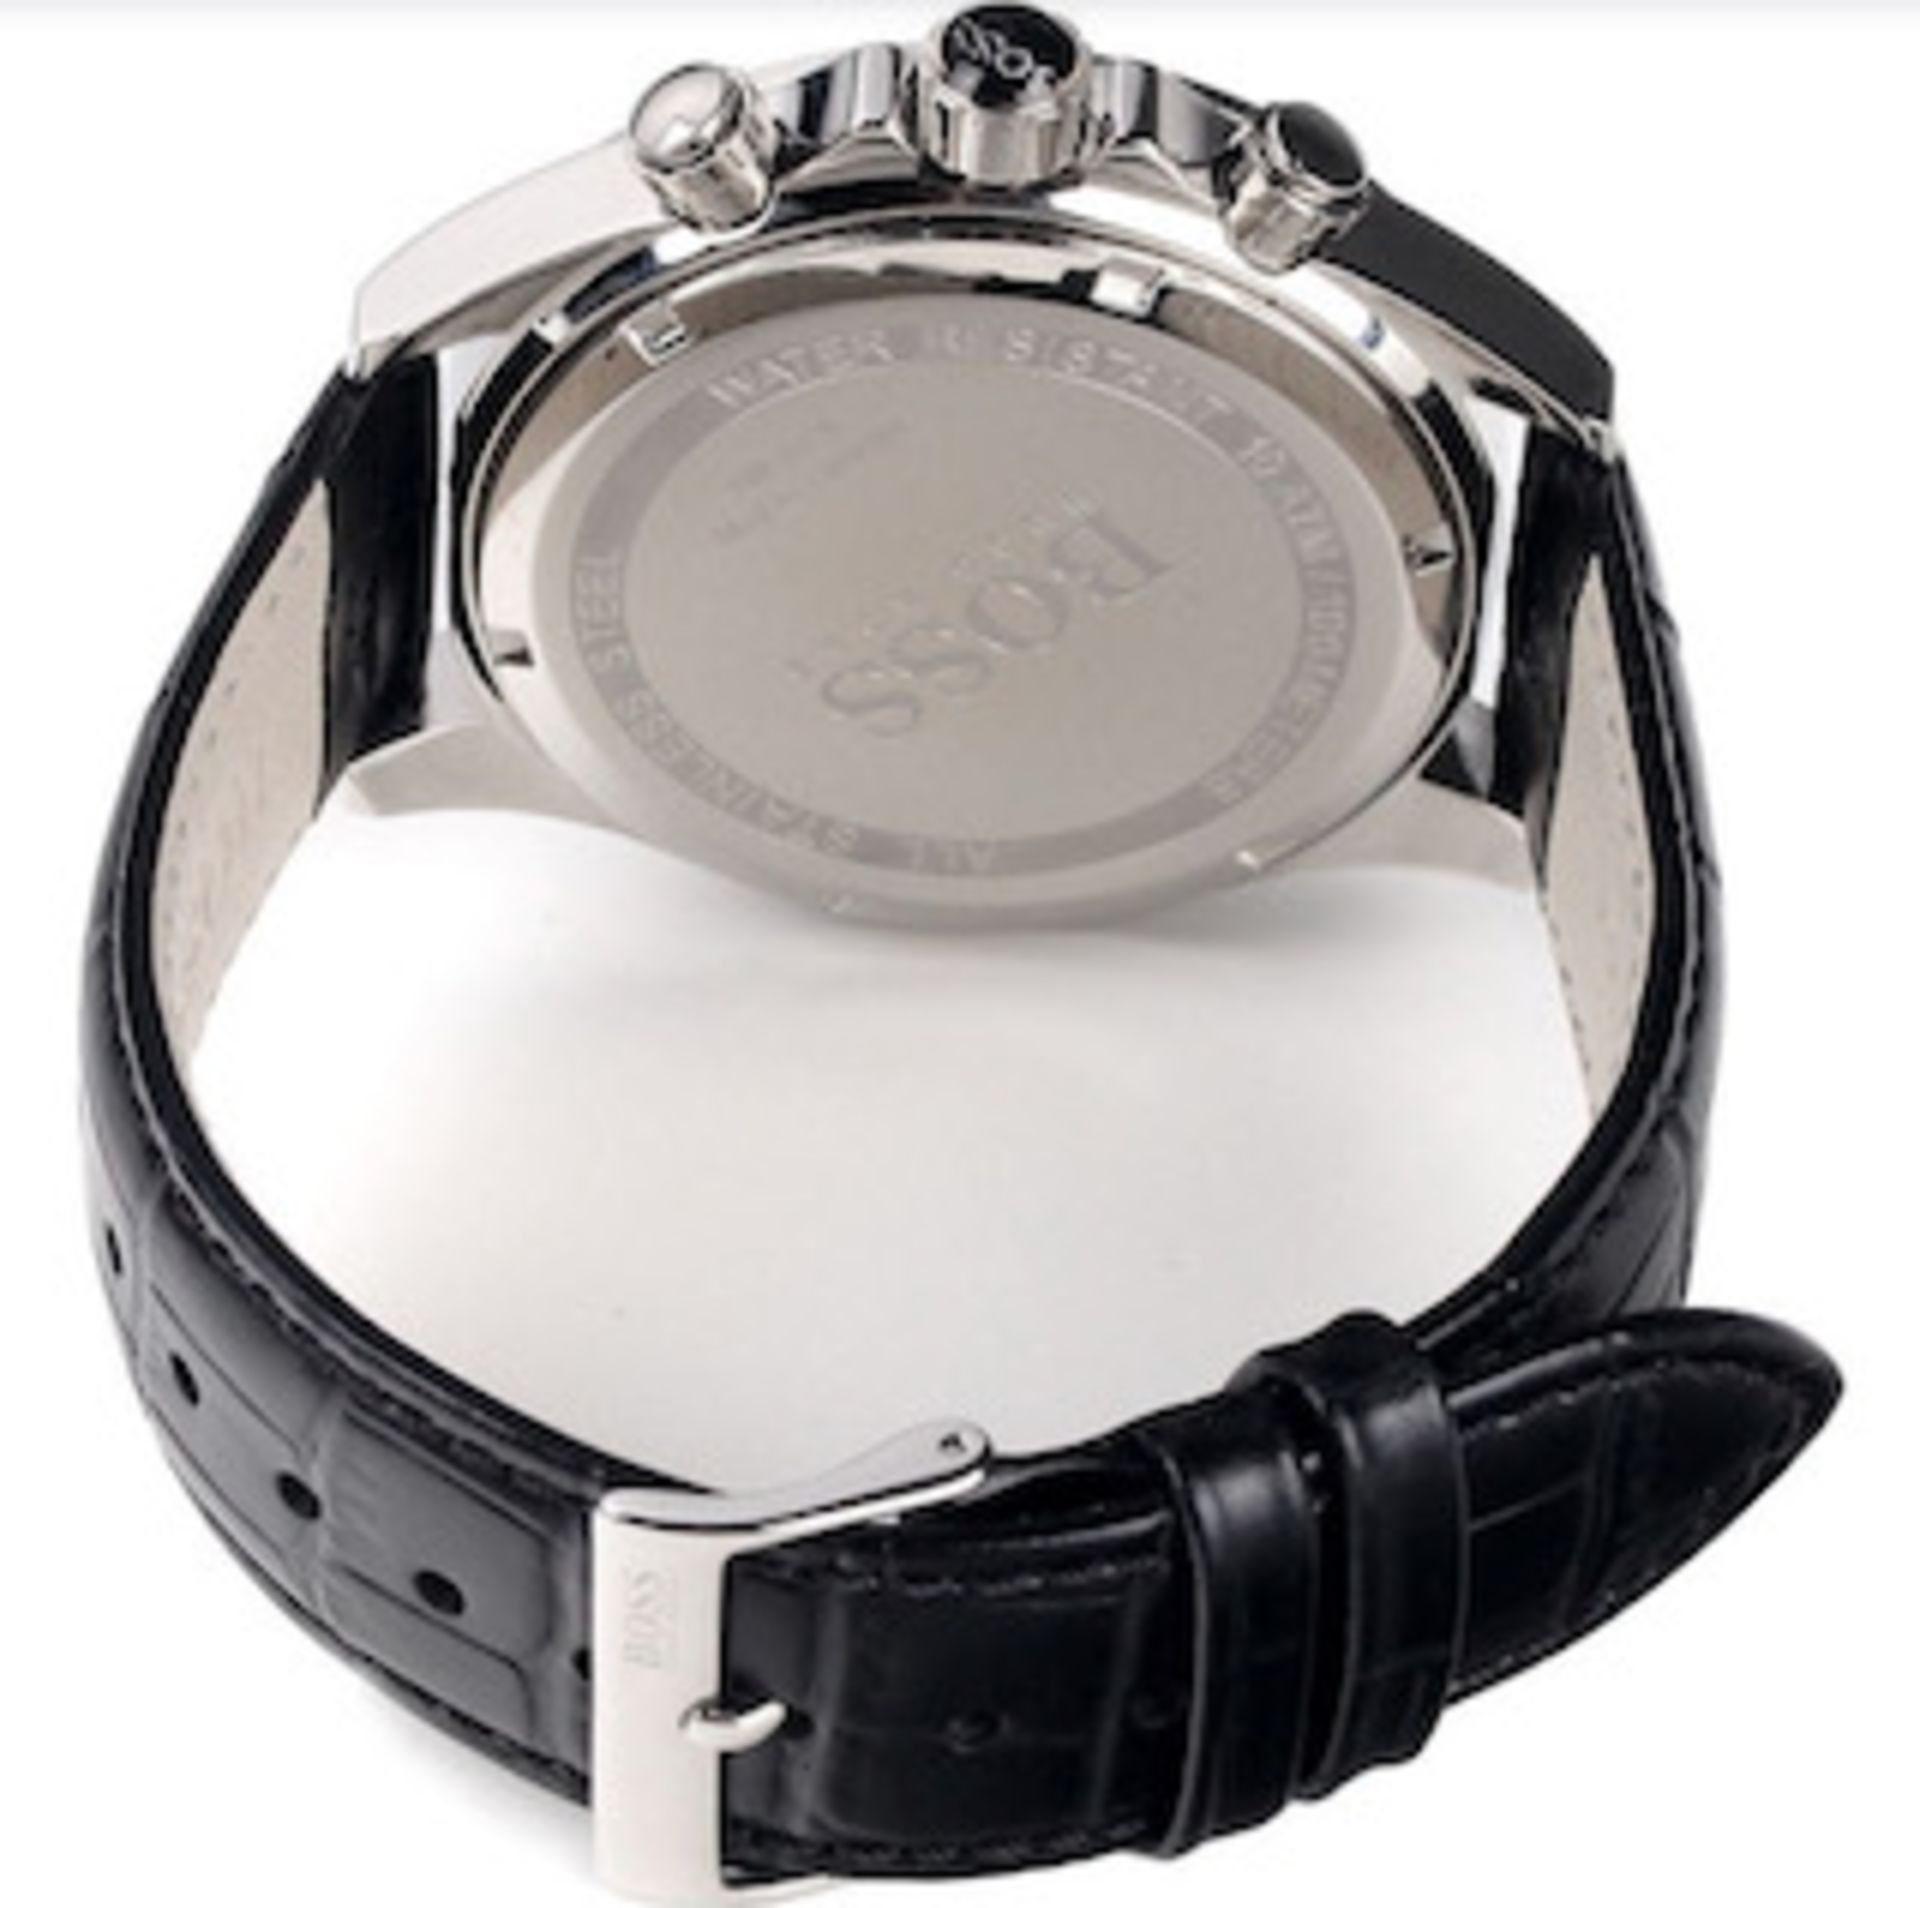 Hugo Boss 1513178 Men's Ikon Black Leather Strap Quartz Chronograph Watch - Image 4 of 4